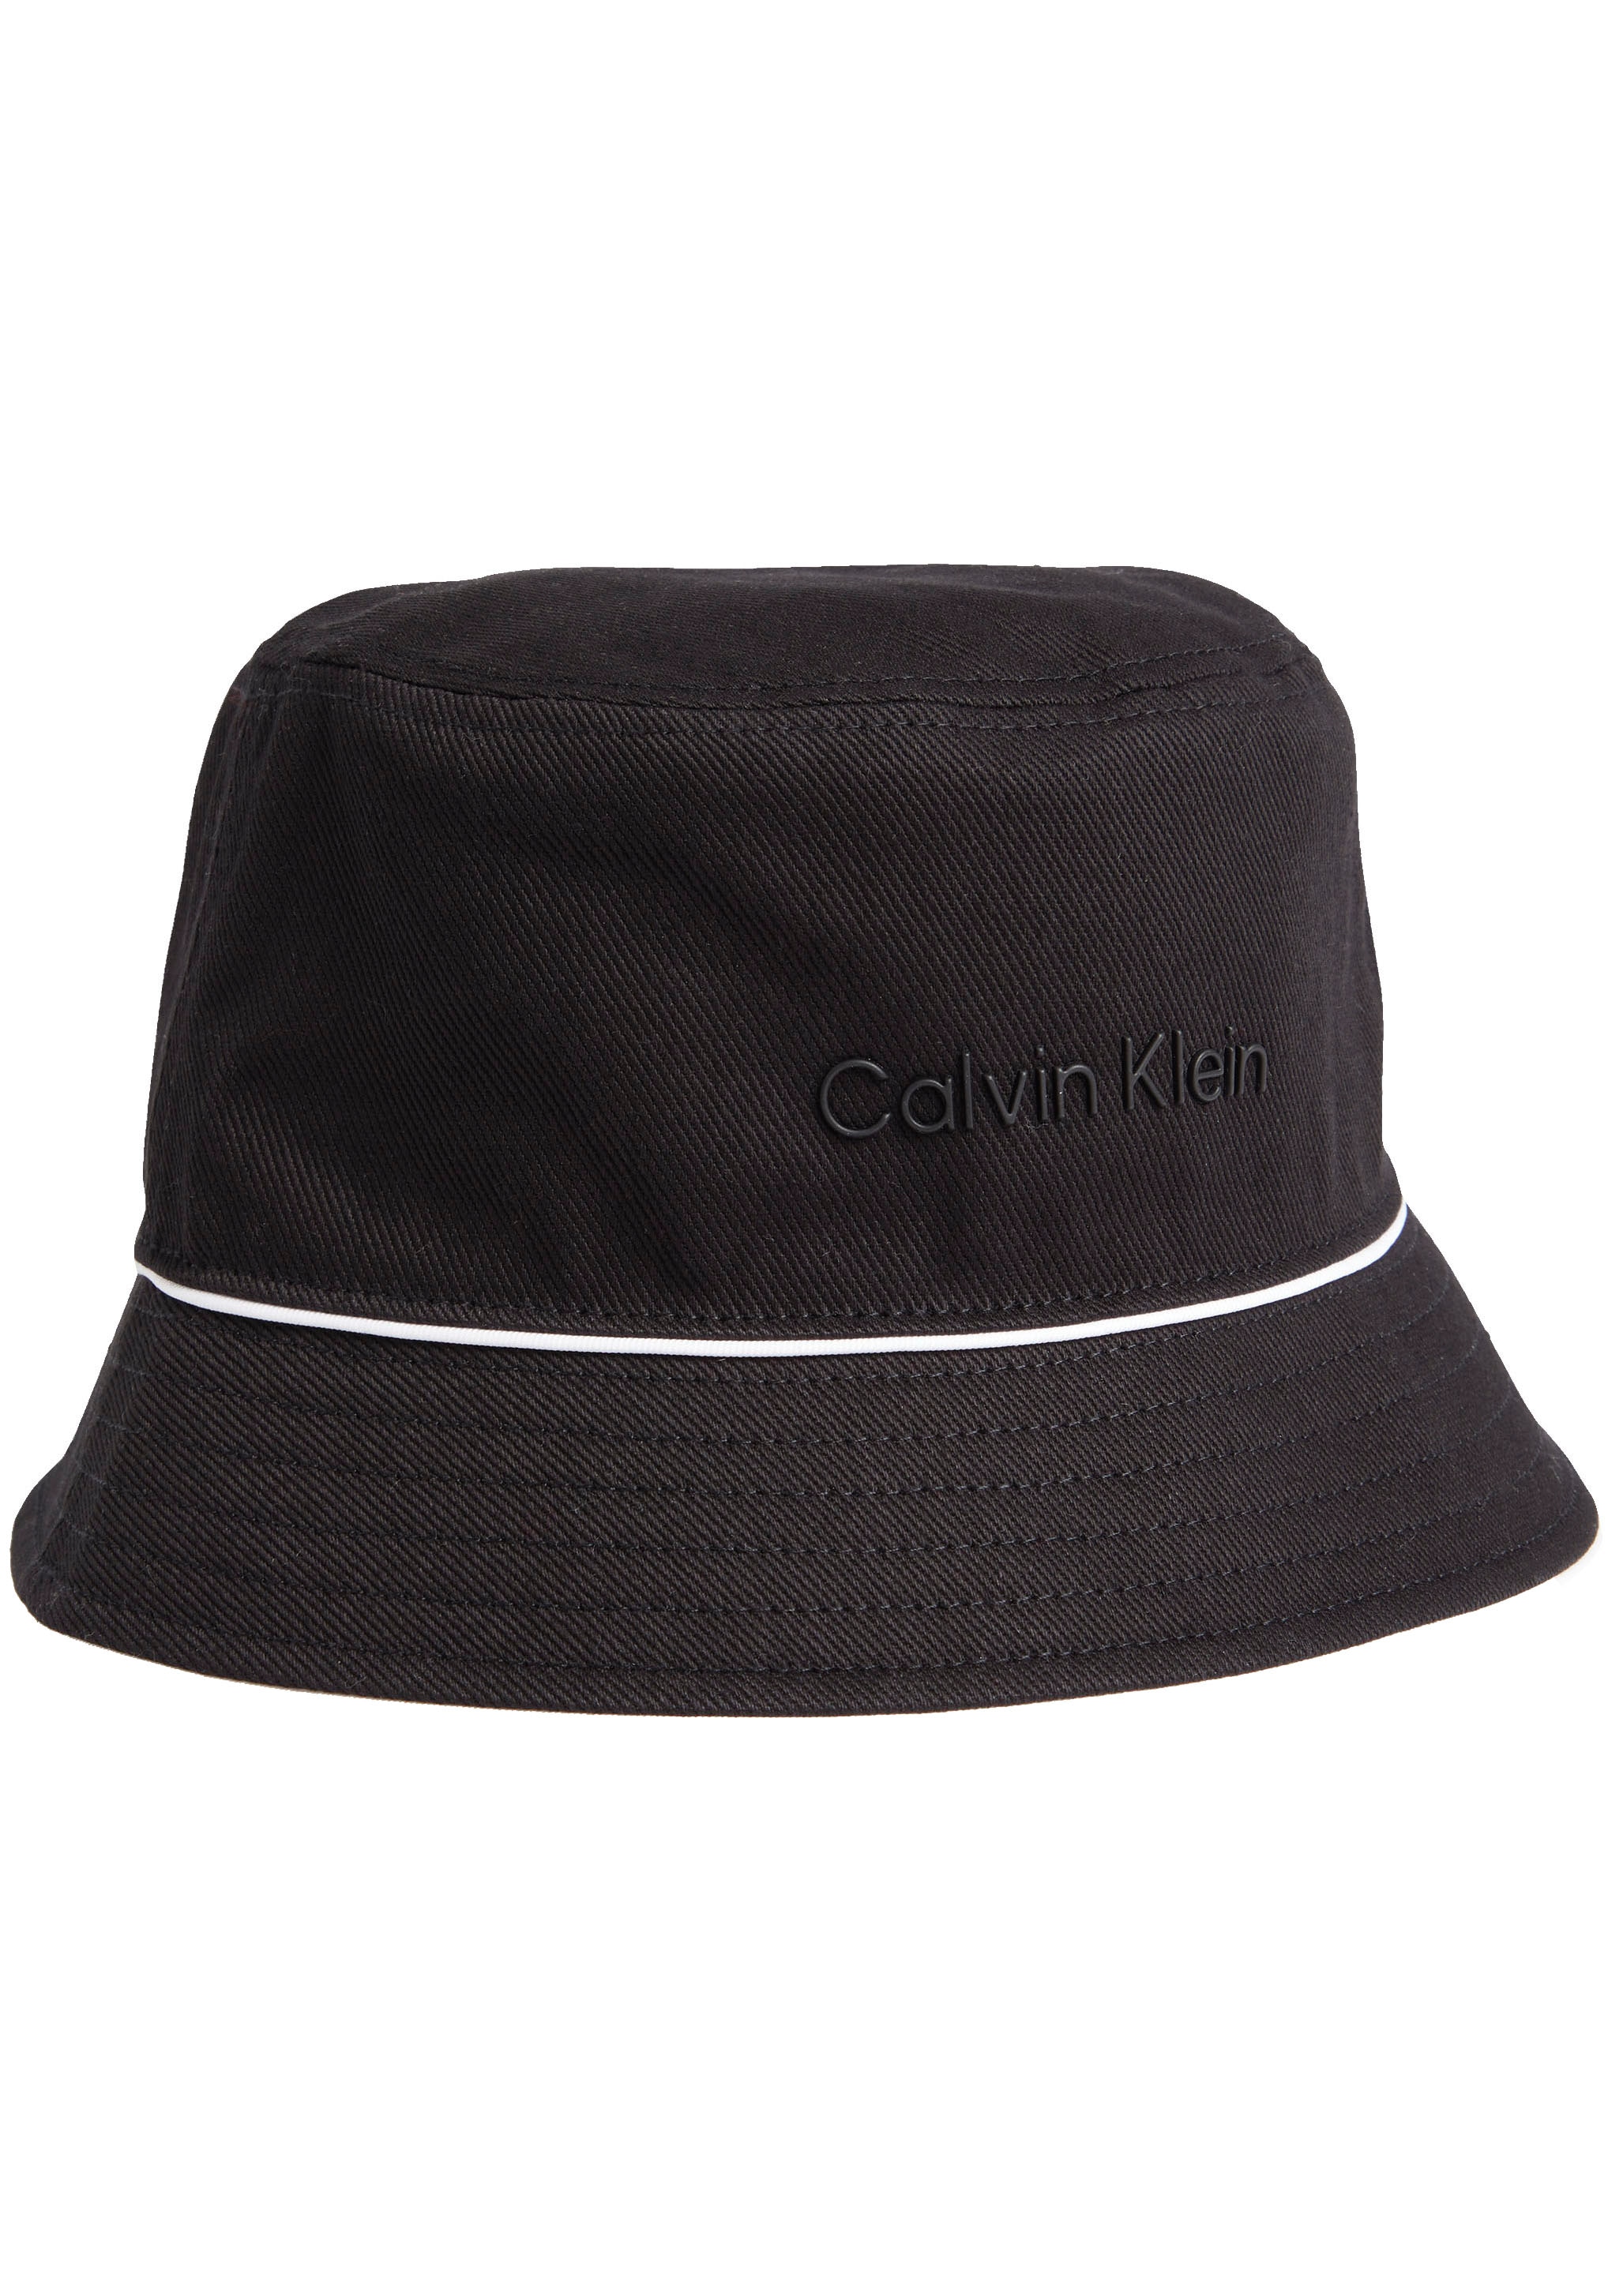 Calvin Klein Baseball Cap kaufen | UNIVERSAL